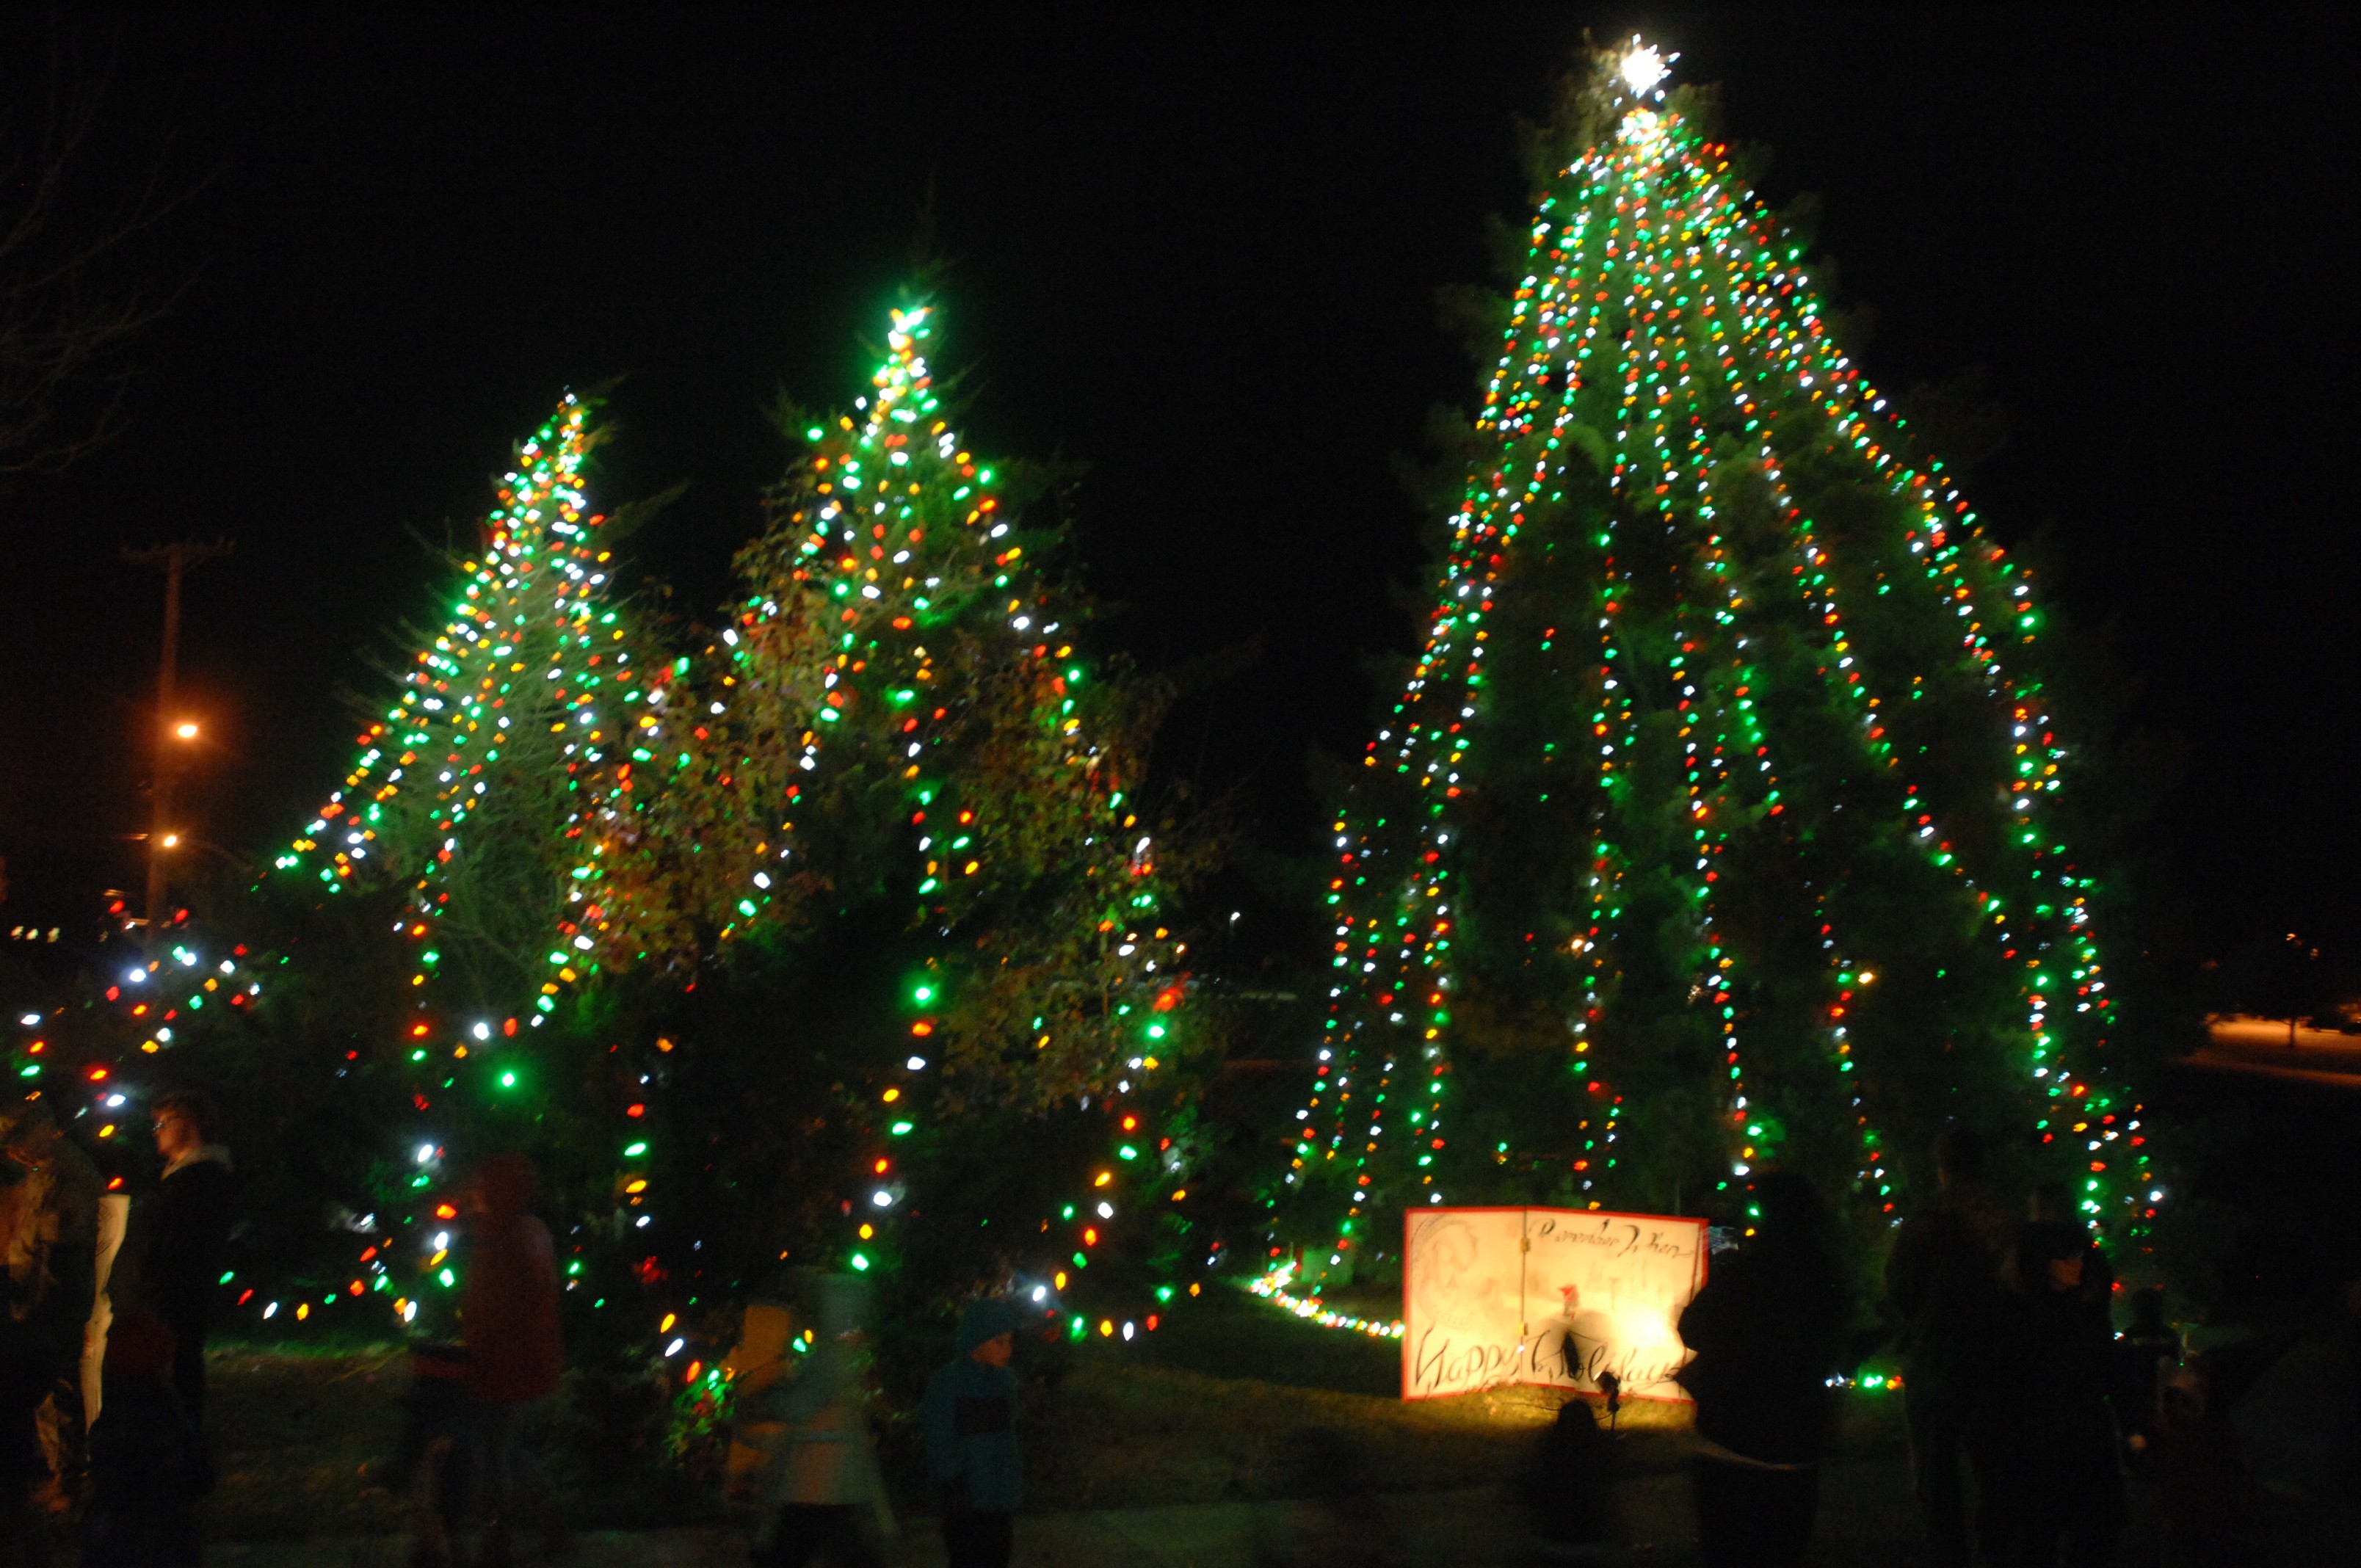 Wonderland, tree lighting ring in season at Fort Leonard Wood Article